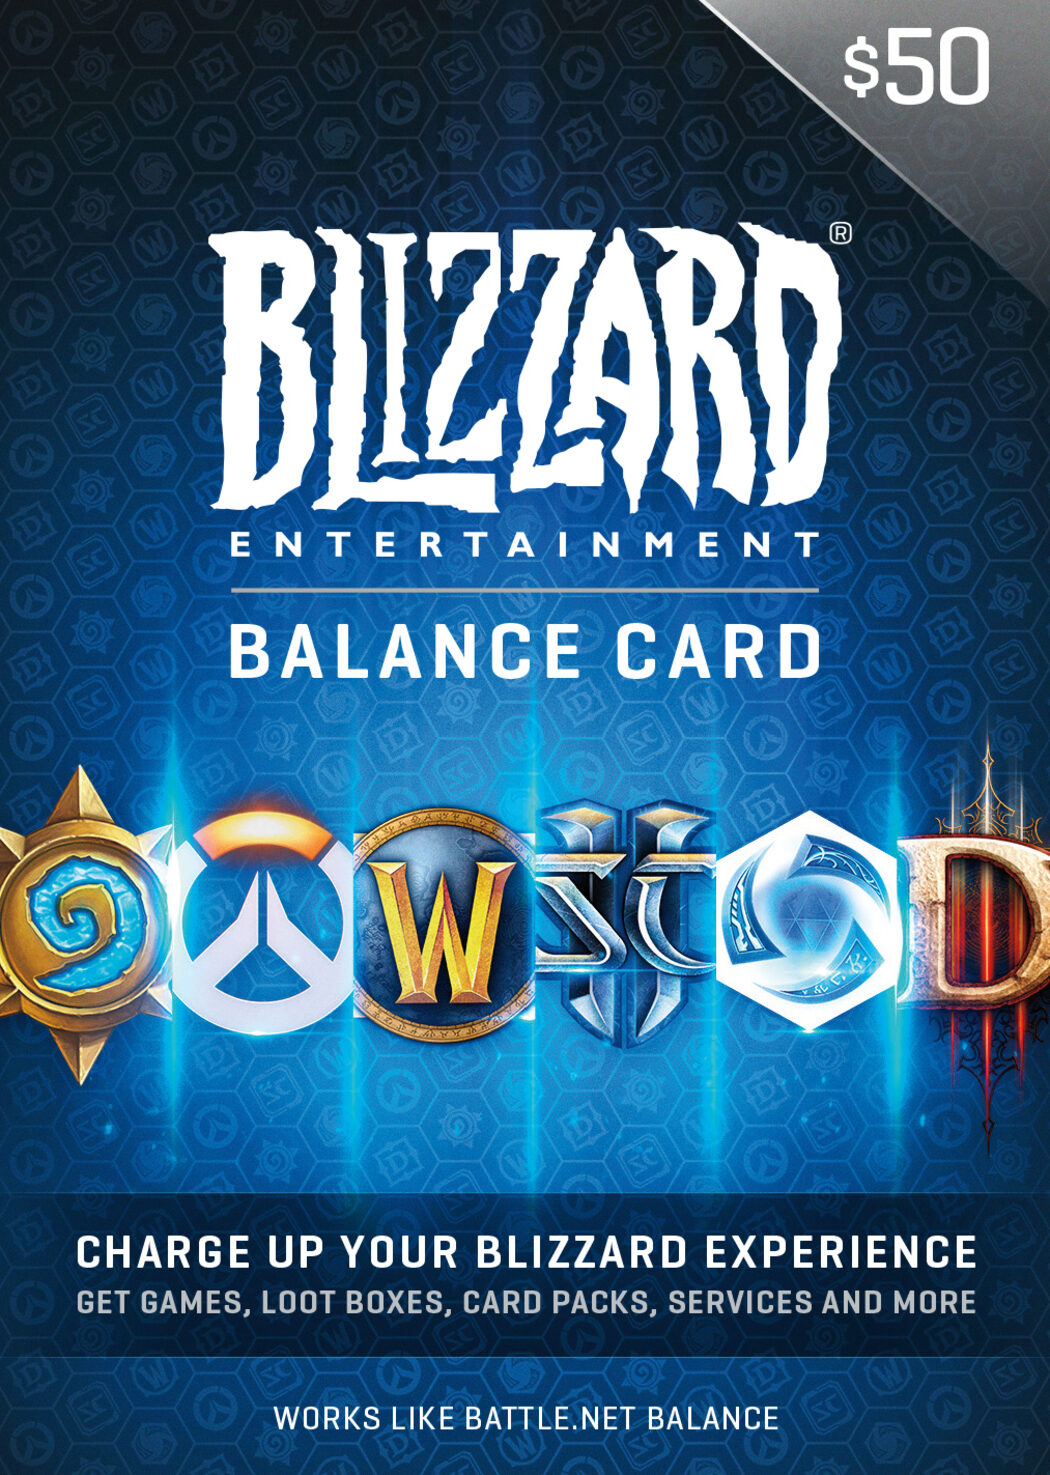 Comprar Cartão Blizzard Battle.Net R$ 50 Reais